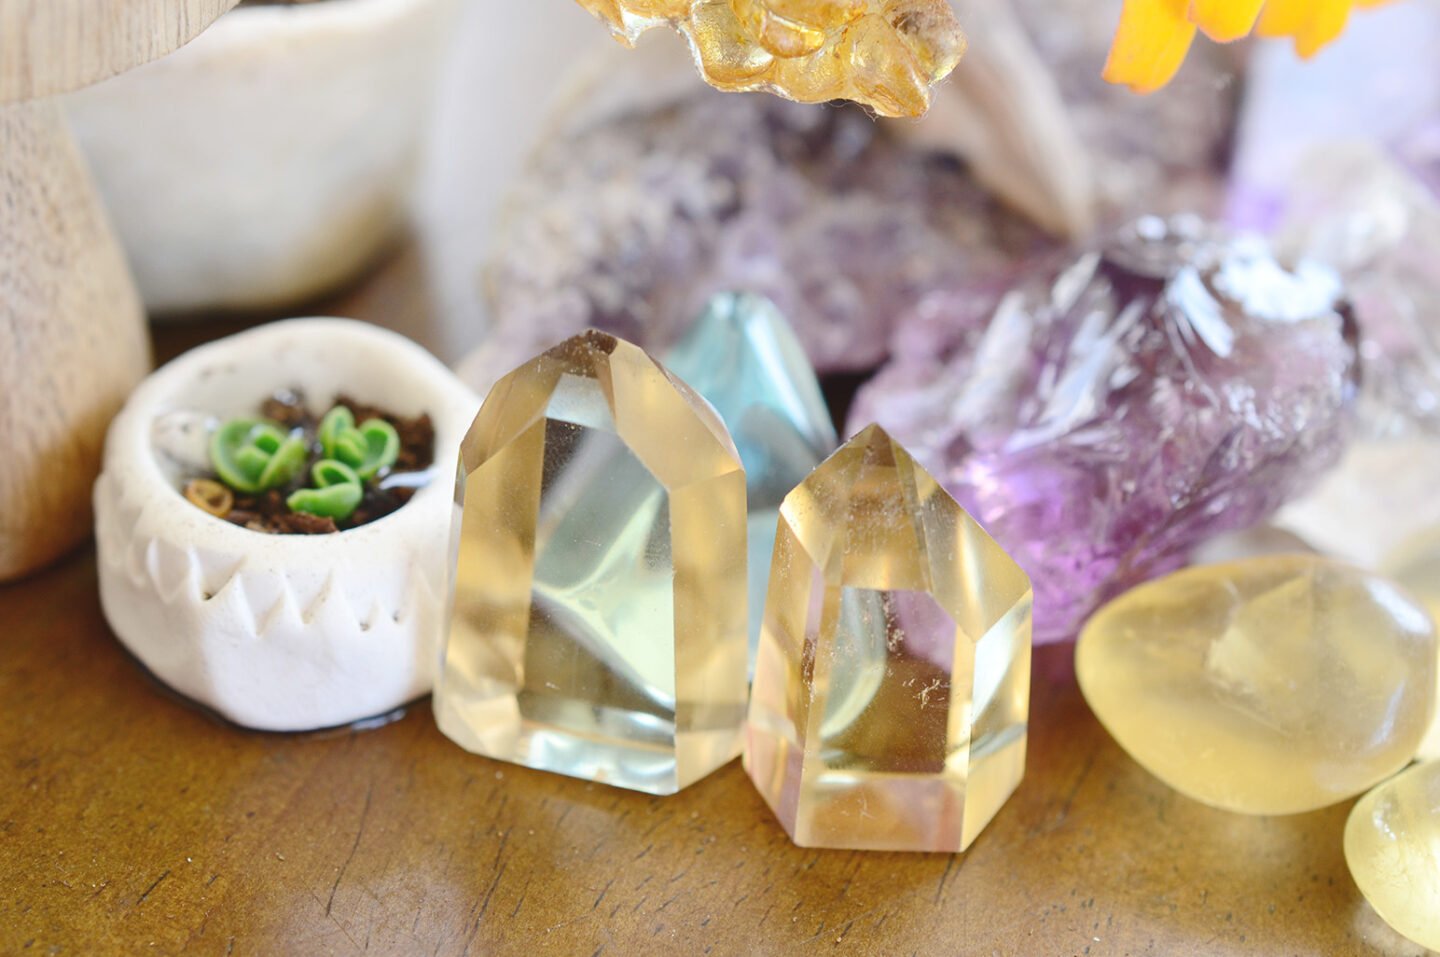 healing gemstones